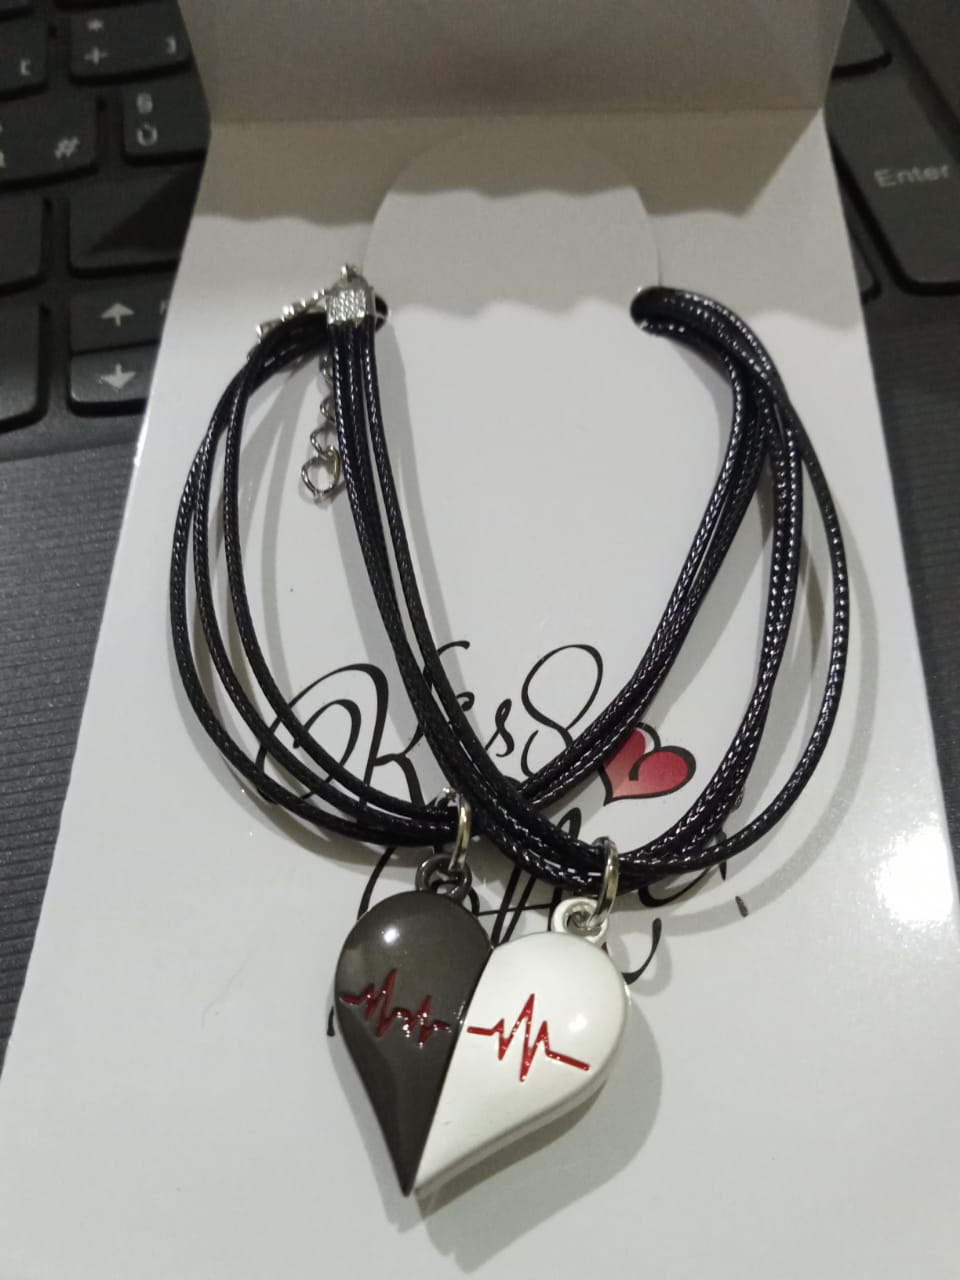 2pcs Men Couple Hand & Heartbeat Magnetic Heart Bracelet Punk Hip Pop Style Jewelry Gift